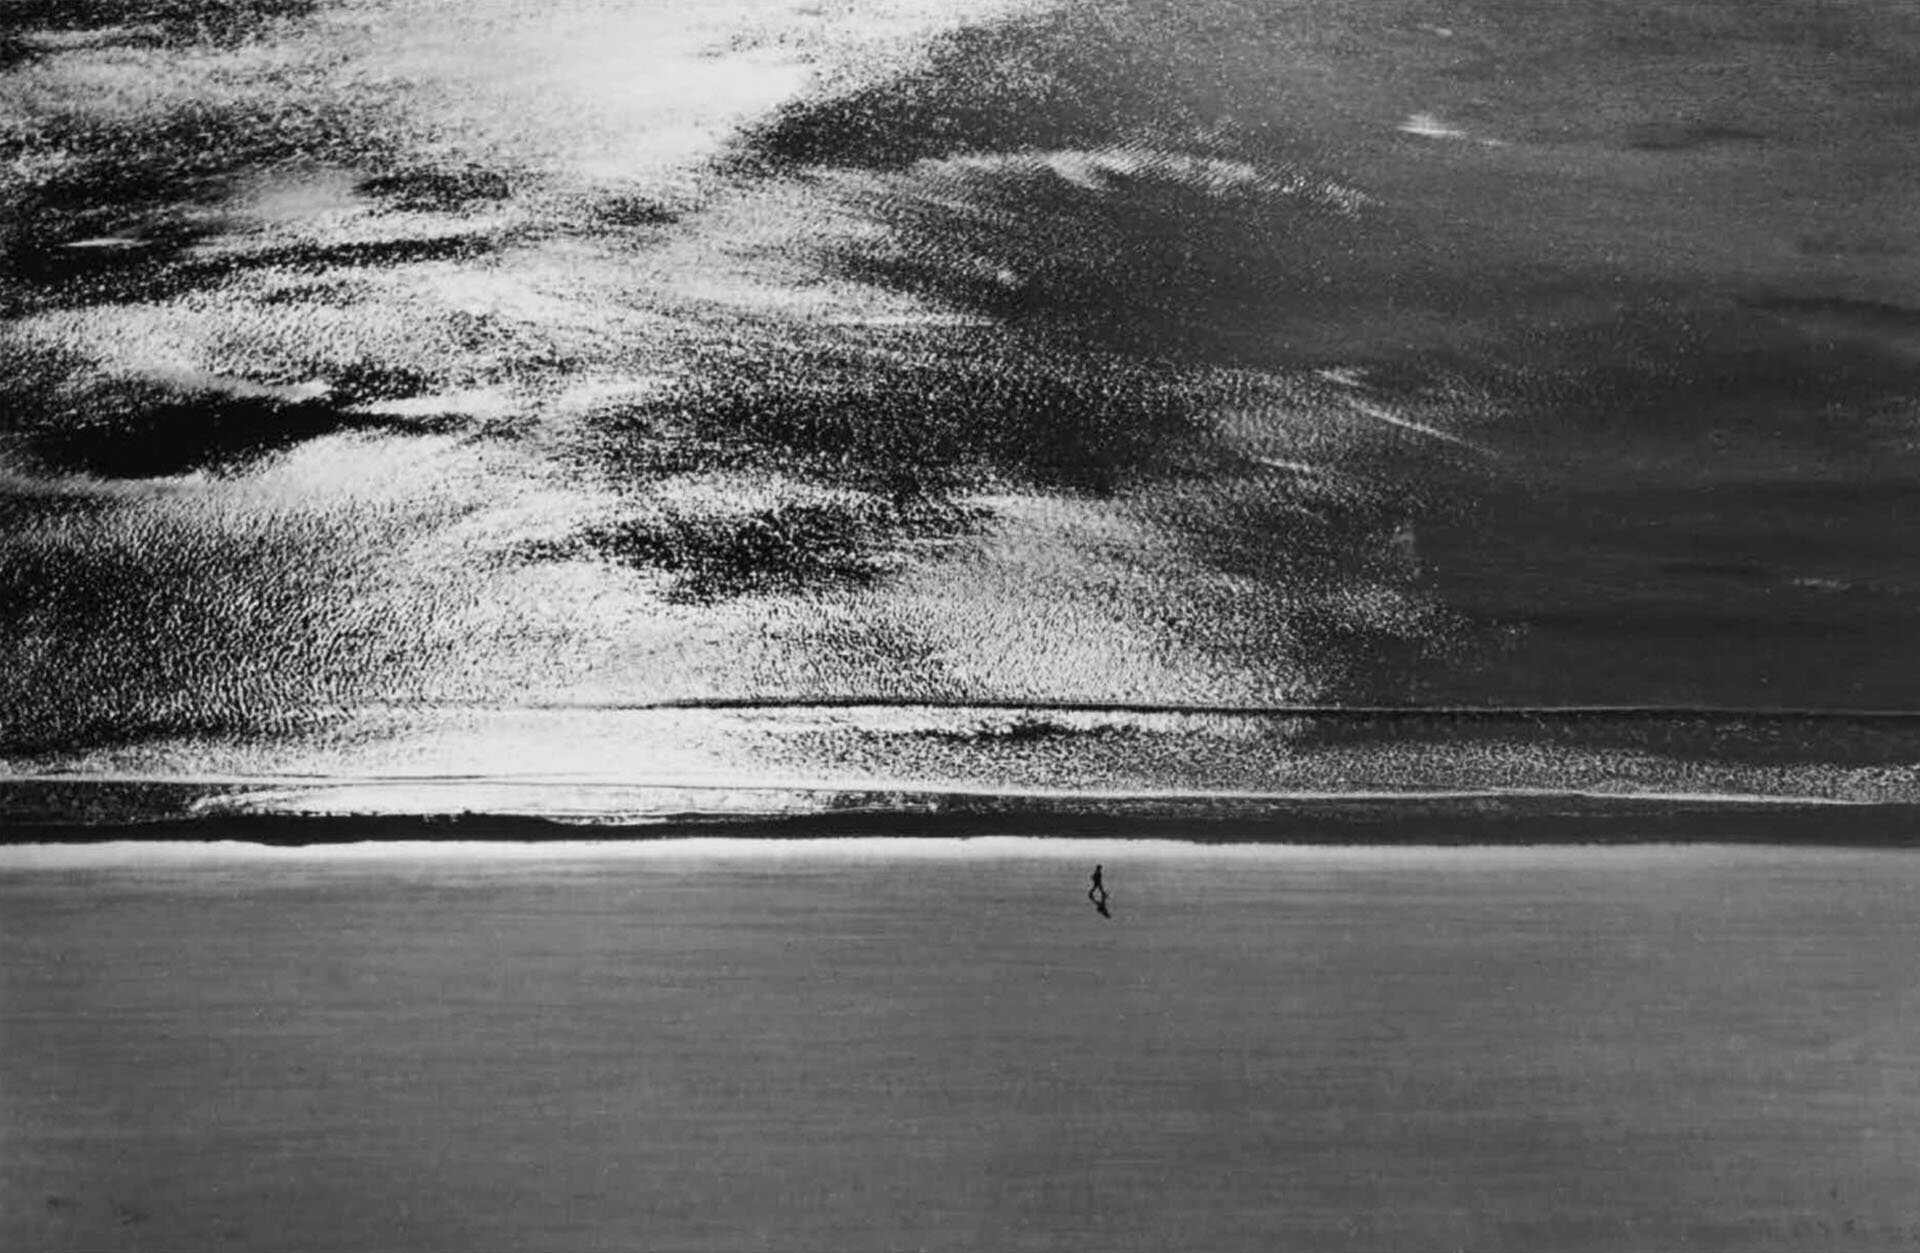  John Fields,  Oneroa Beach, Waiheke Island, Auckland,  1969 